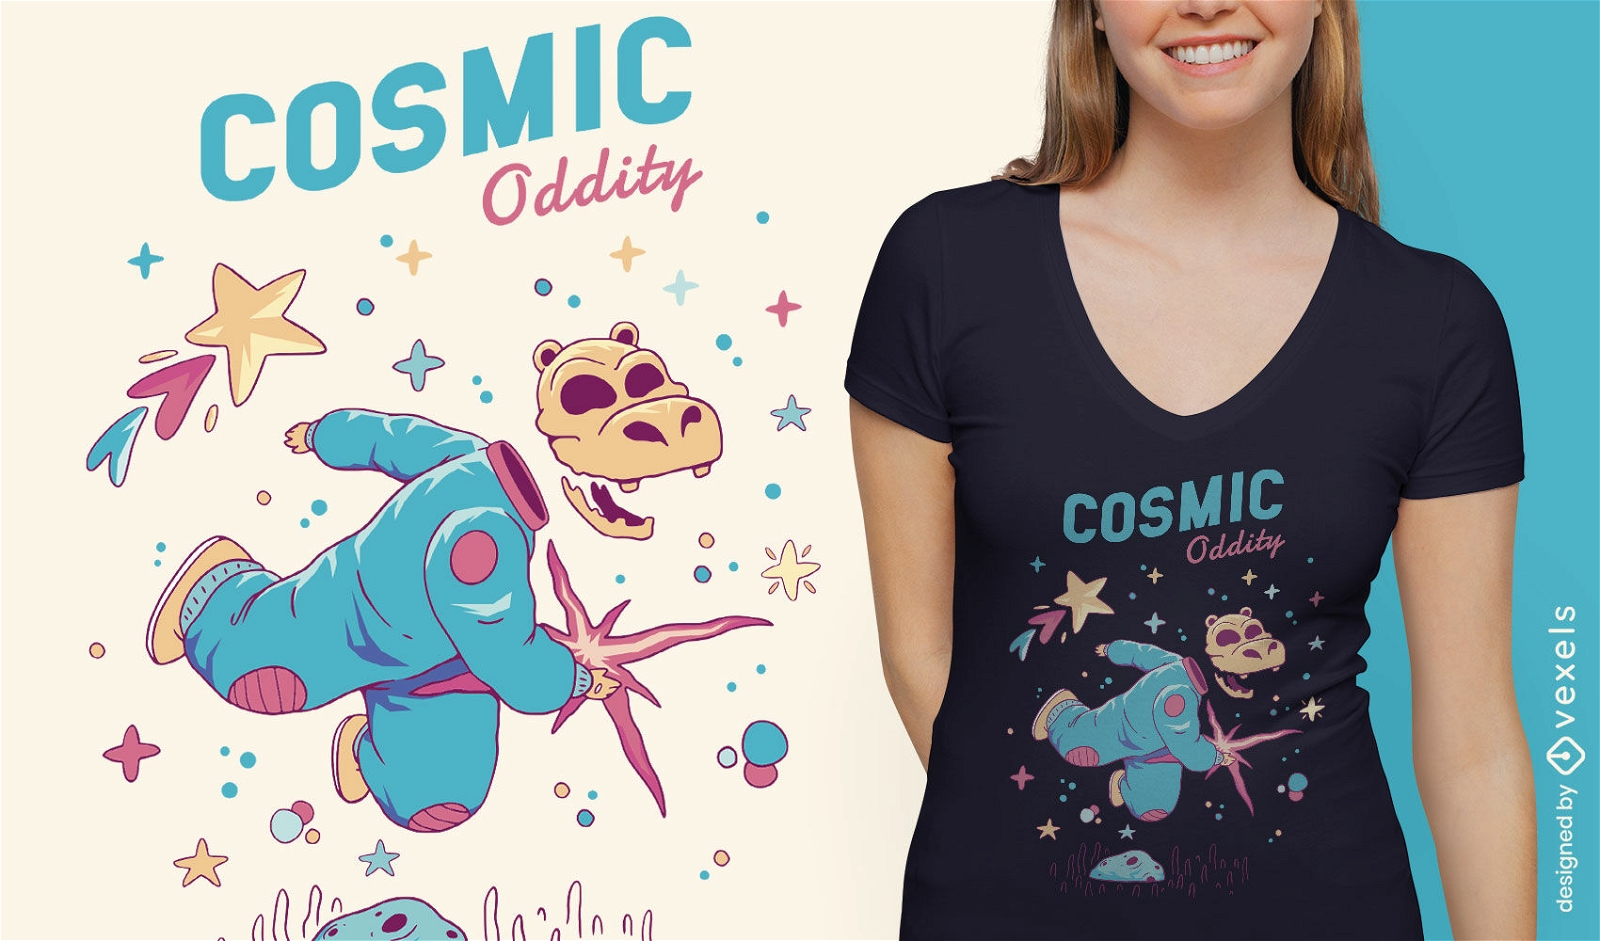 Cosmic oddity space hippo t-shirt design